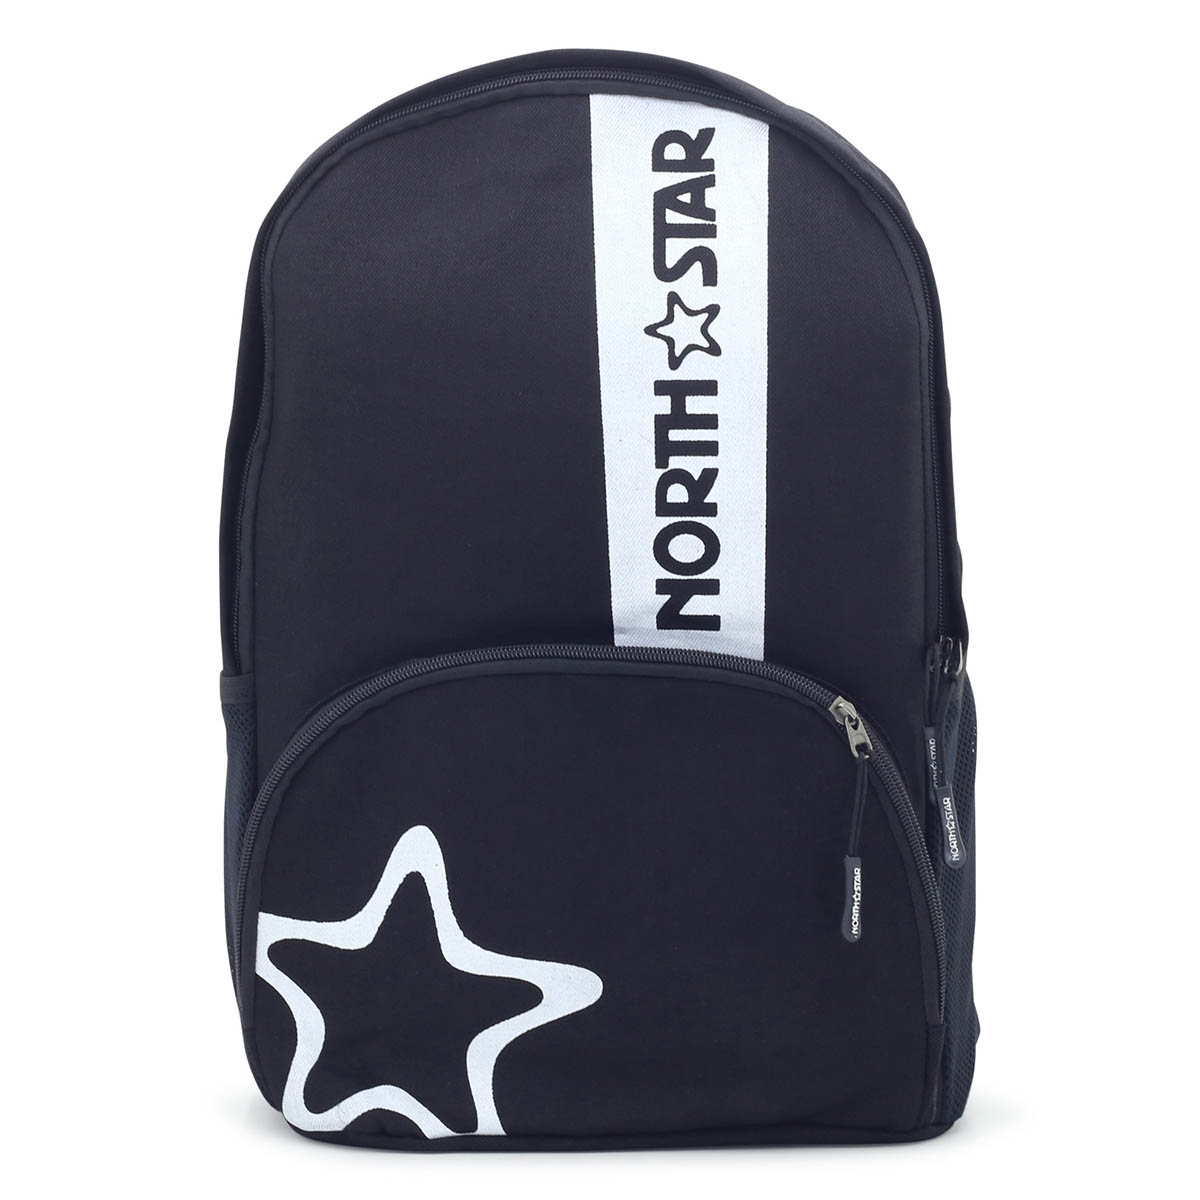 North Star Black Backpack: Buy Online 